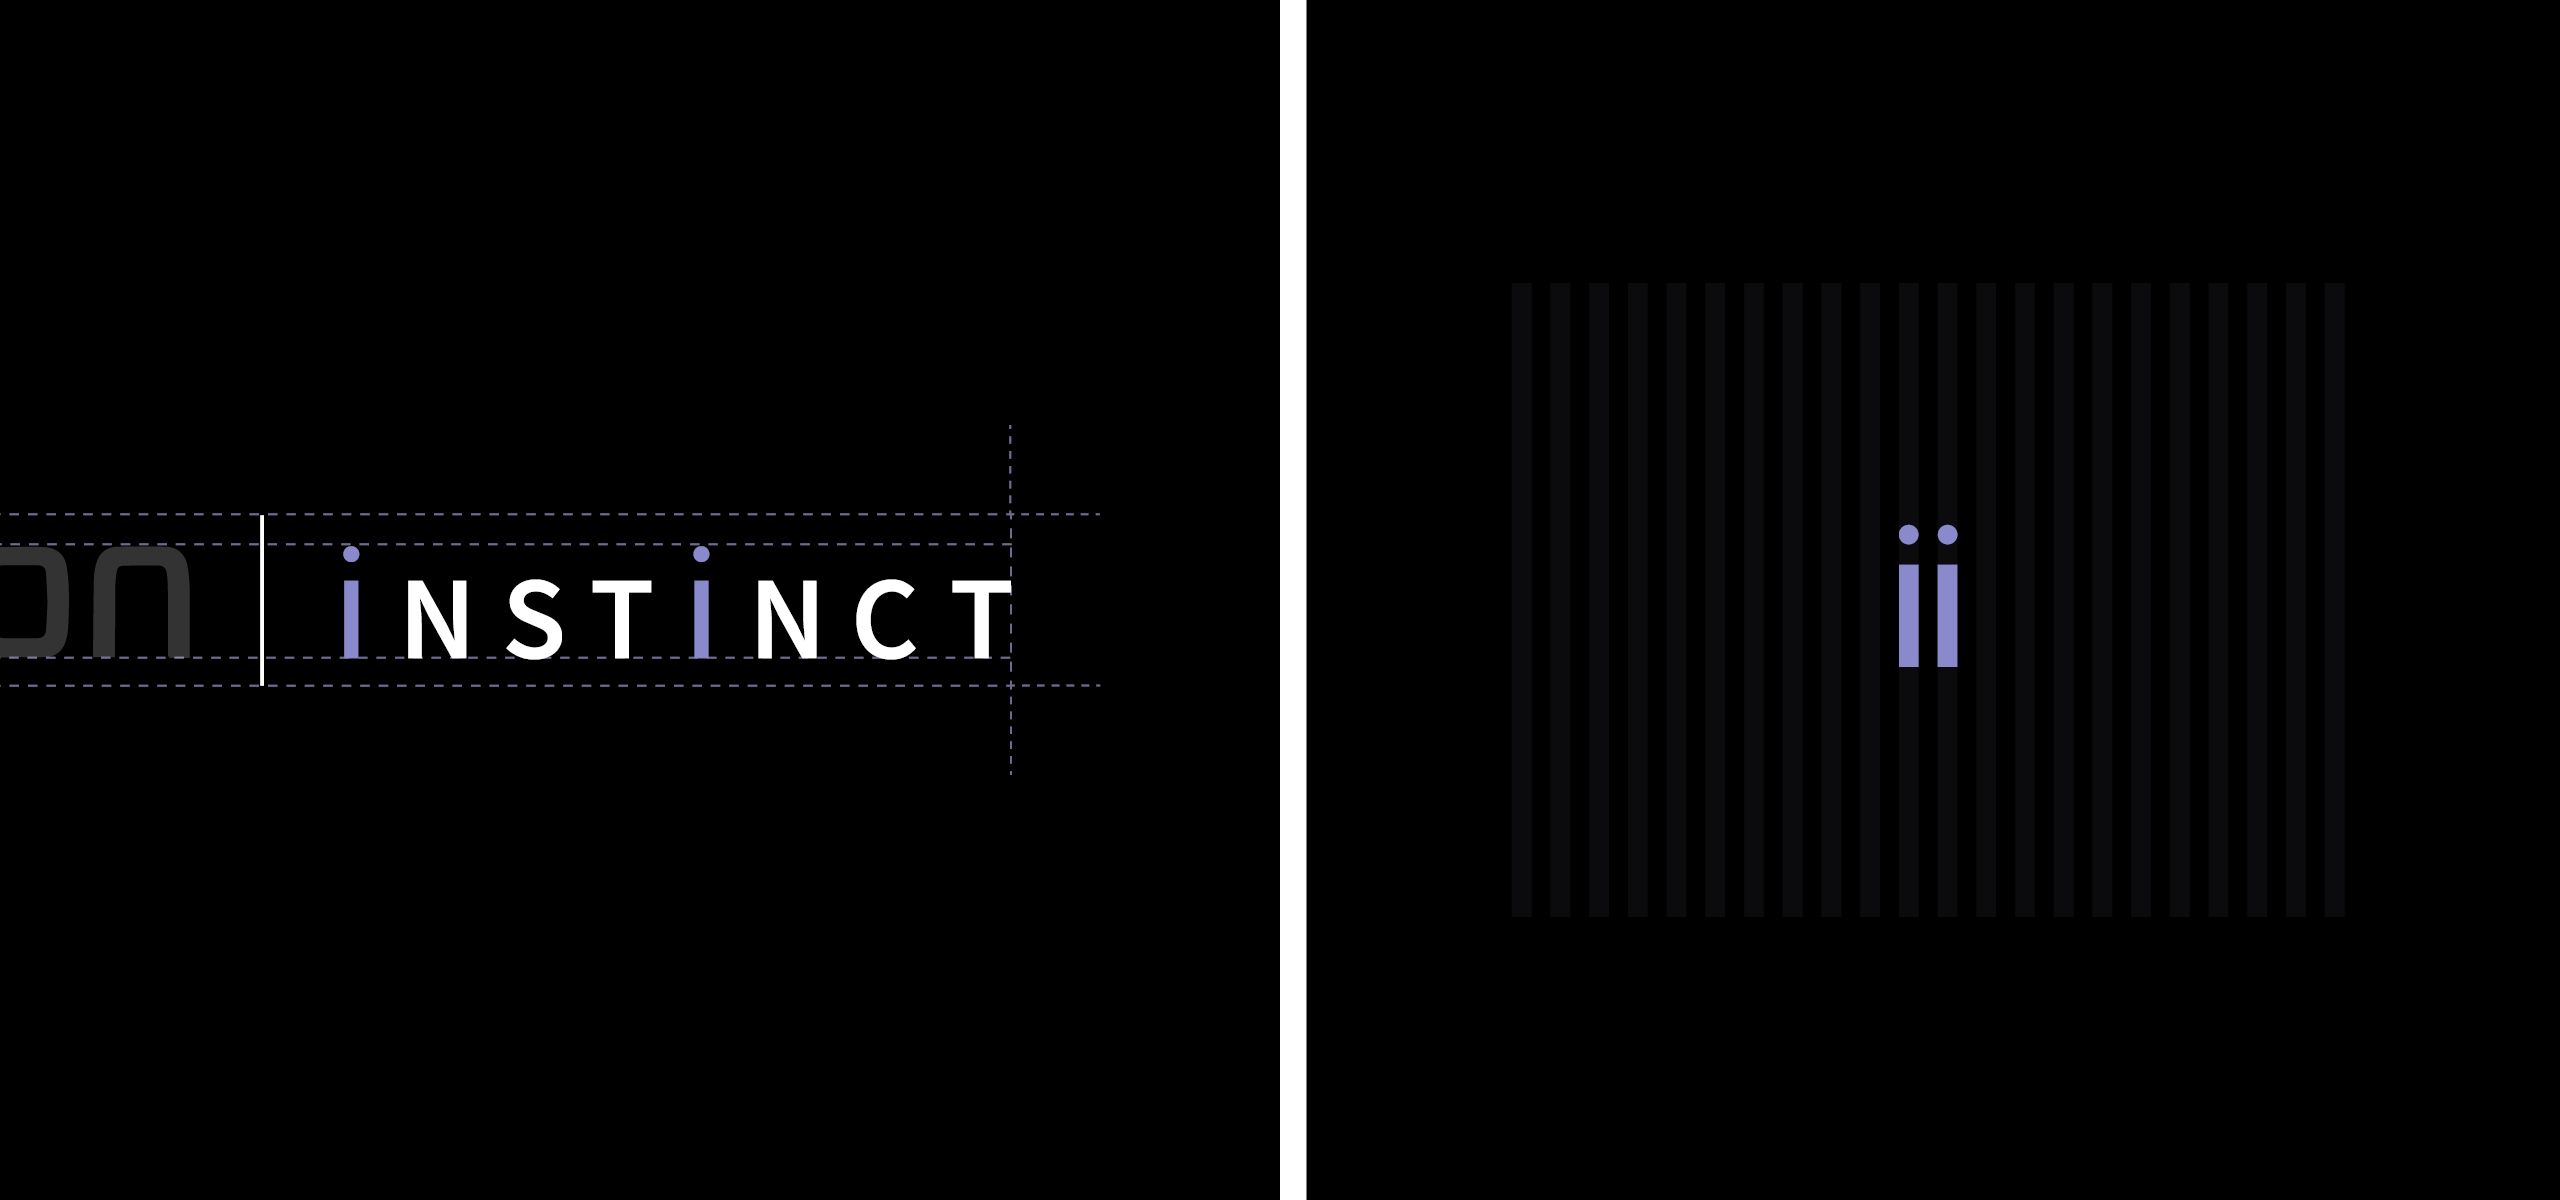 Design process outlined for Pontoon Instinct logo